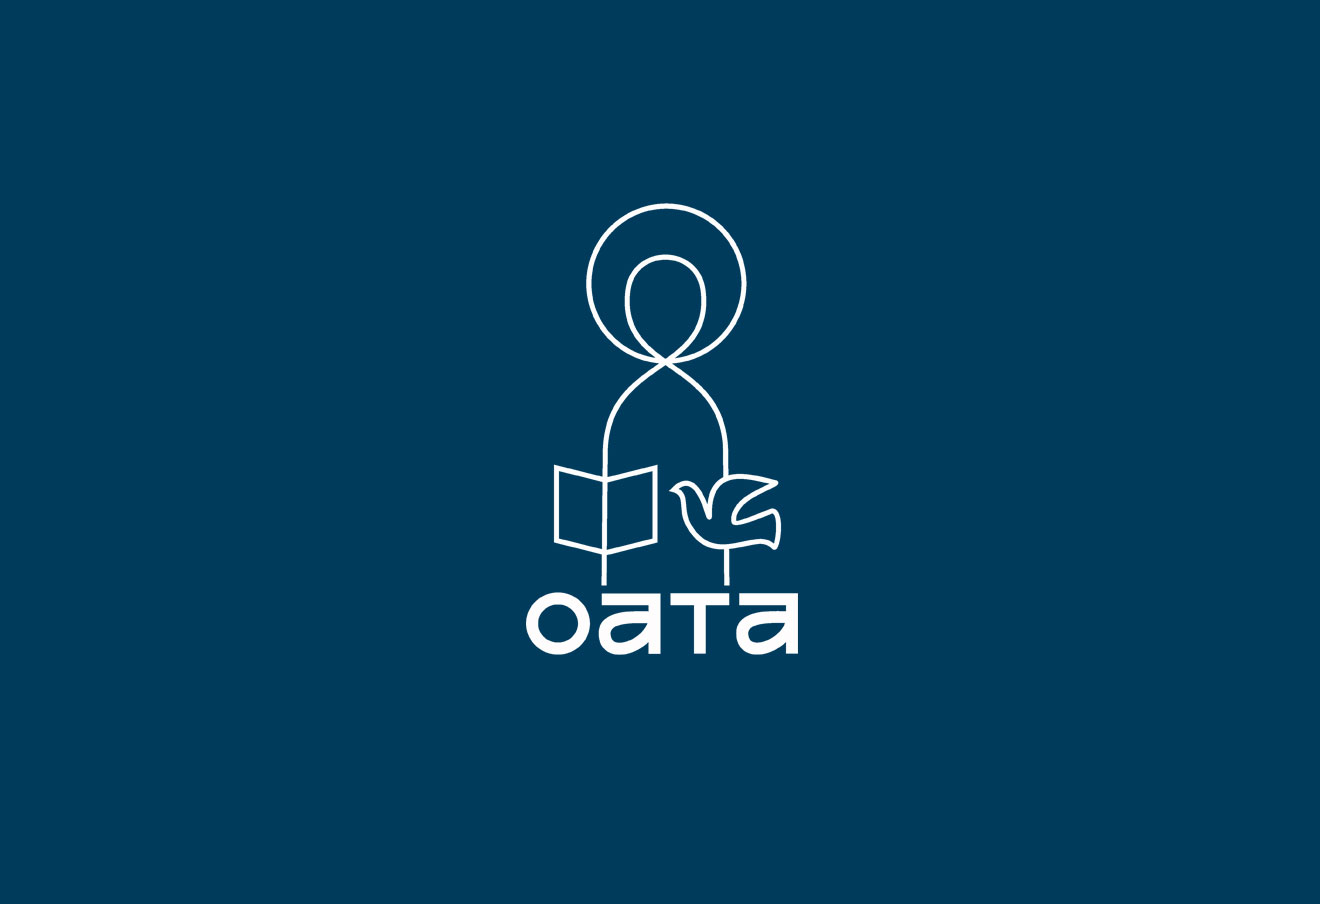 oata_logo_blue_01